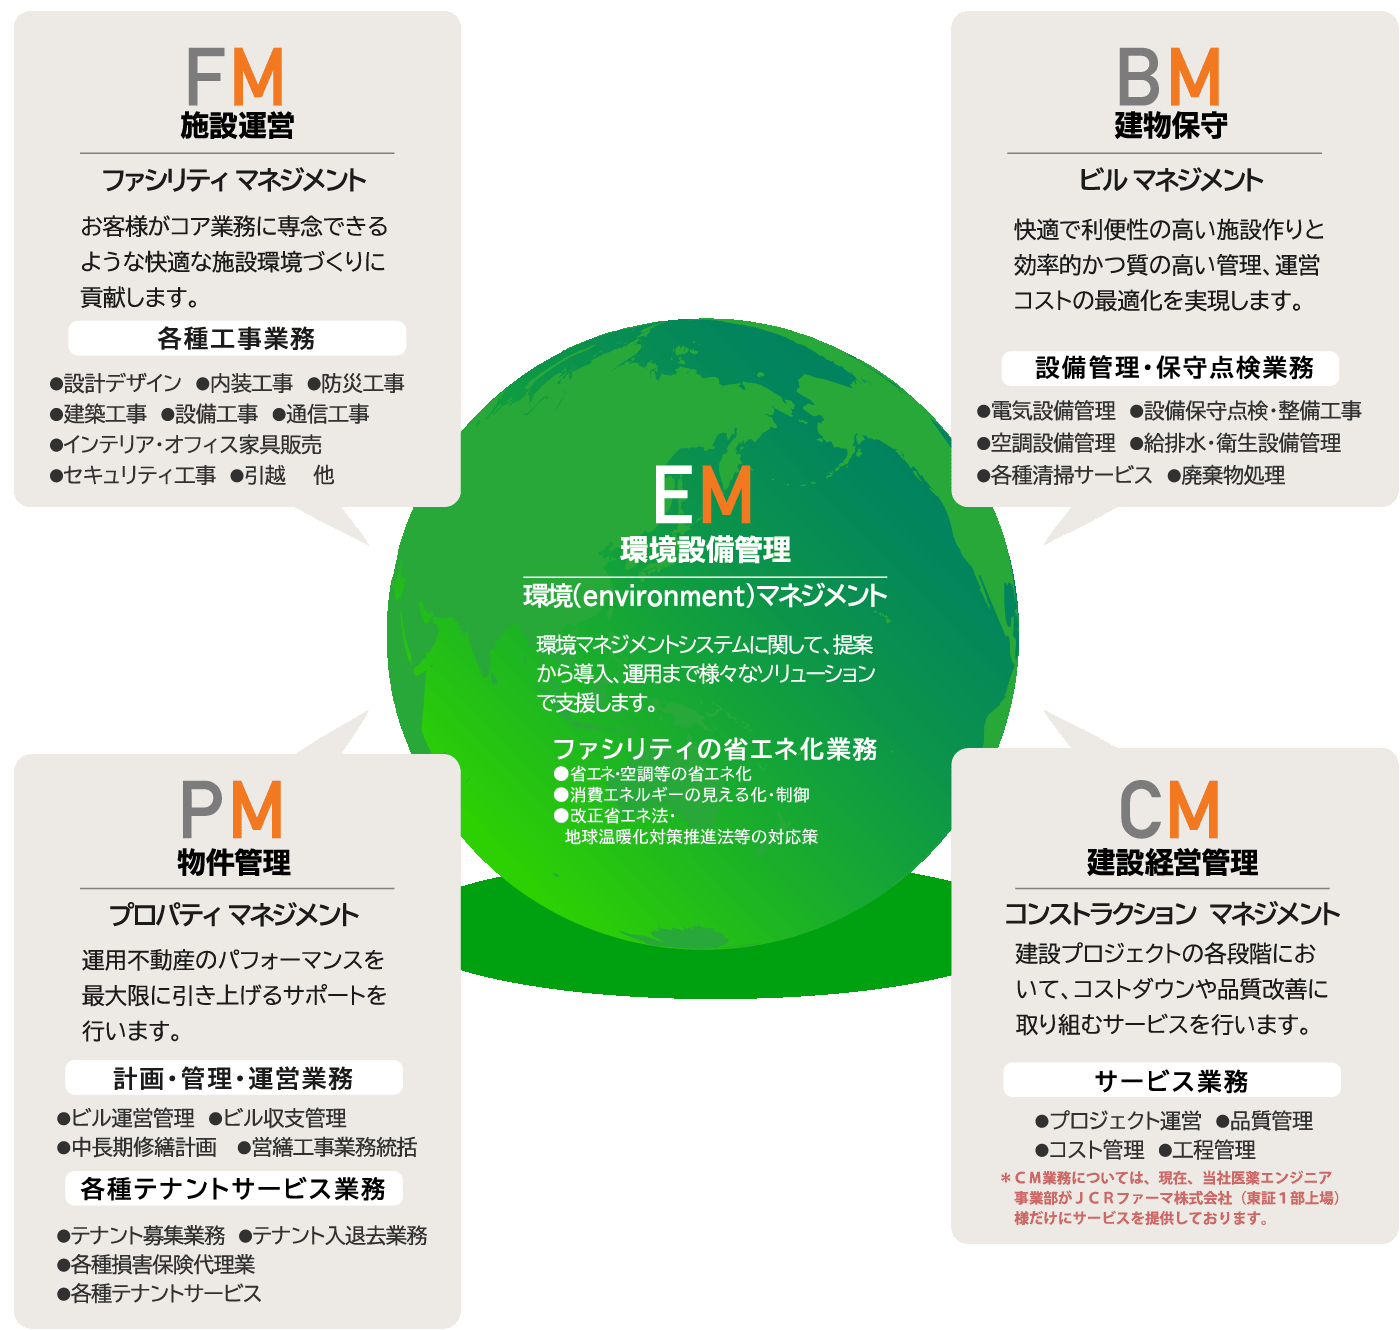 5つのM　EM　環境設備管理　FM施設運営　BM建物保守　PM物件管理　CM建設経営管理